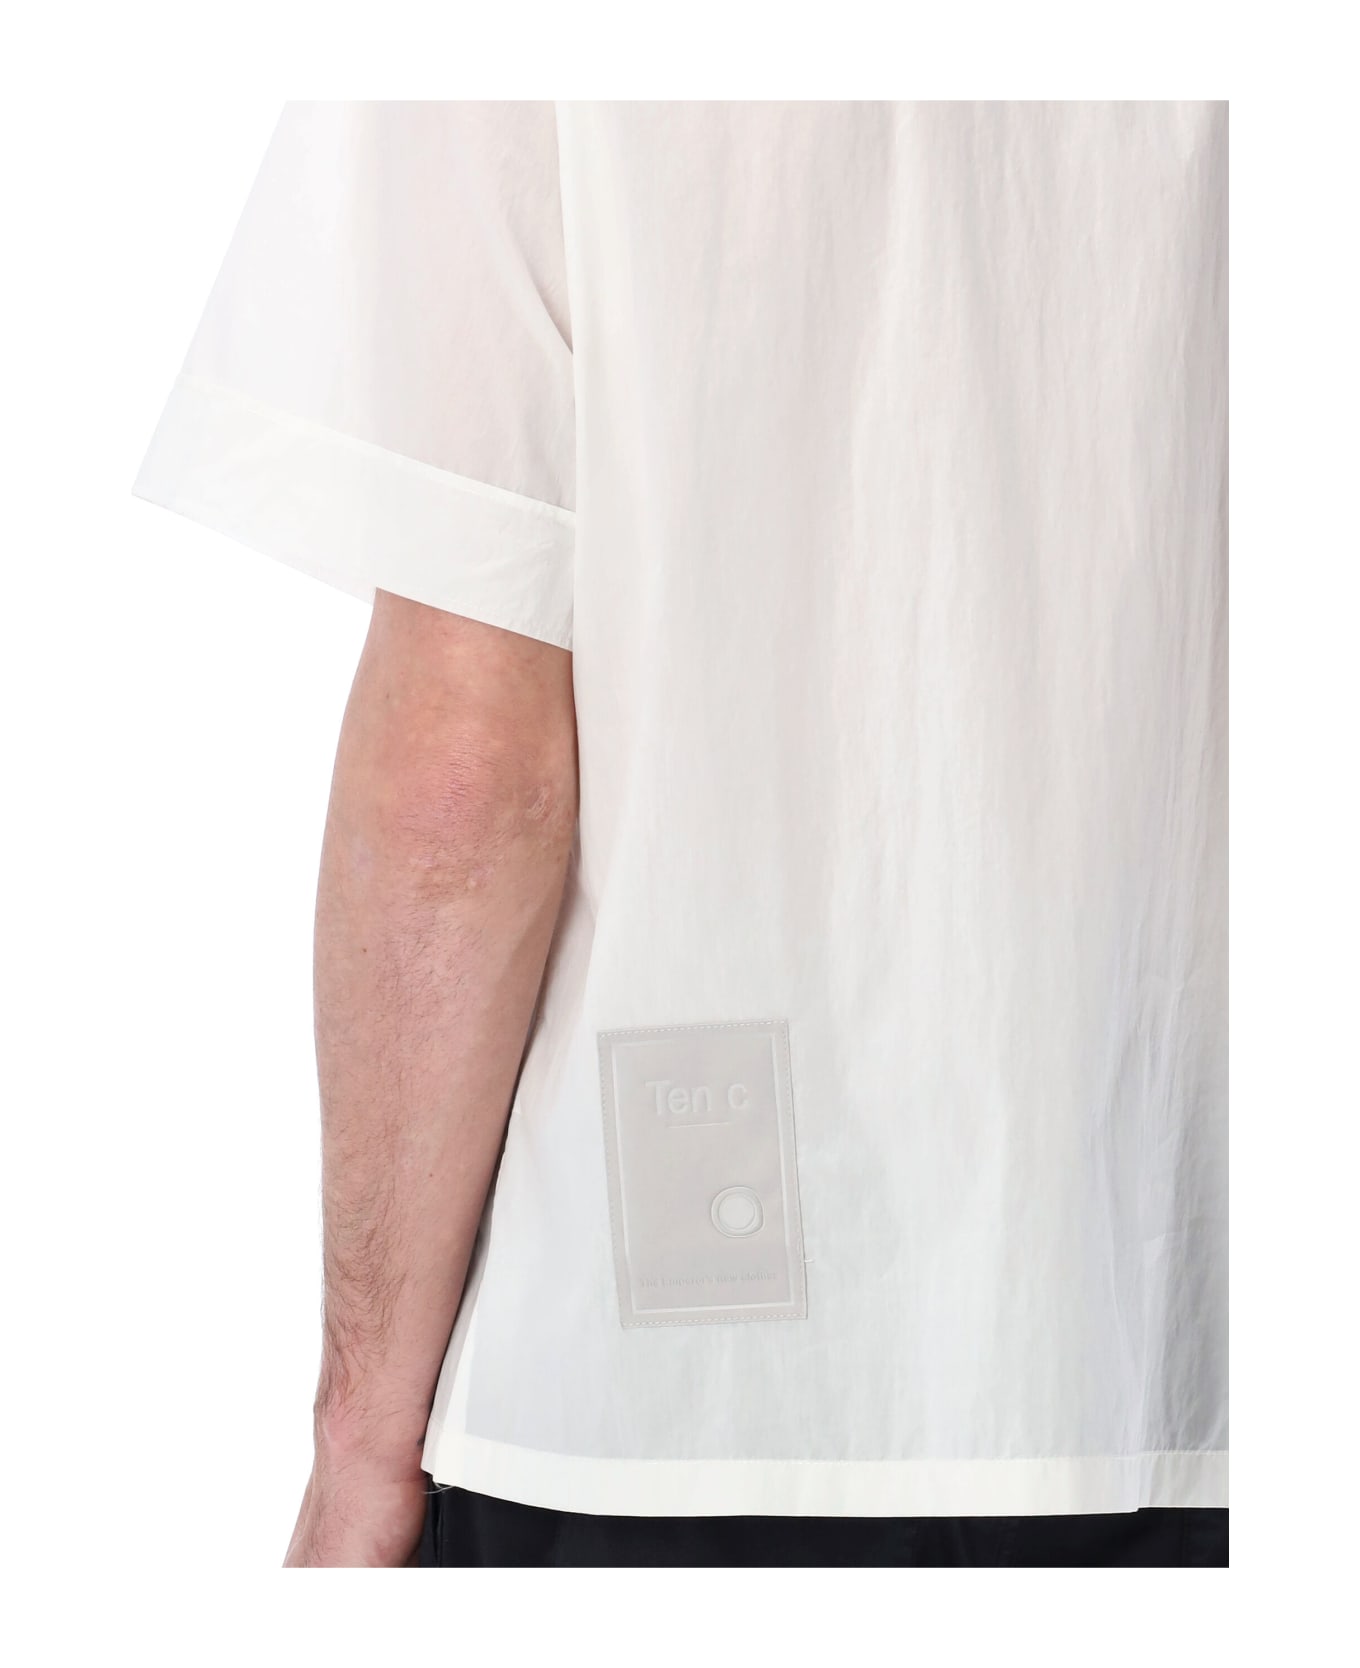 Ten C Short Sleeves Shirt - SNOW WHITE